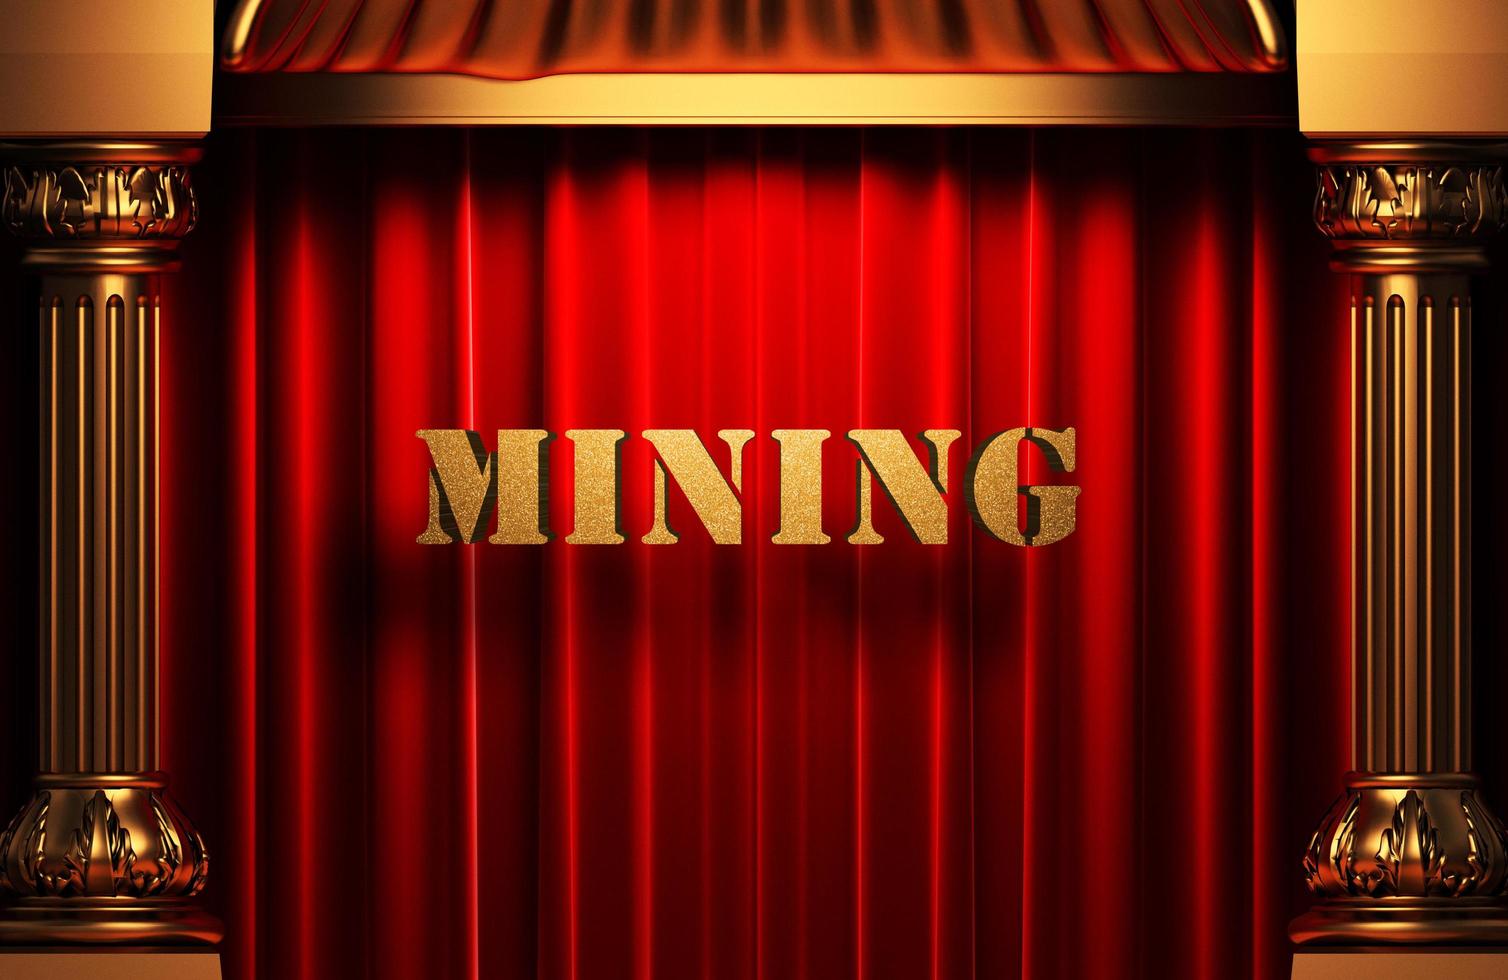 Bergbau goldenes Wort auf rotem Vorhang foto